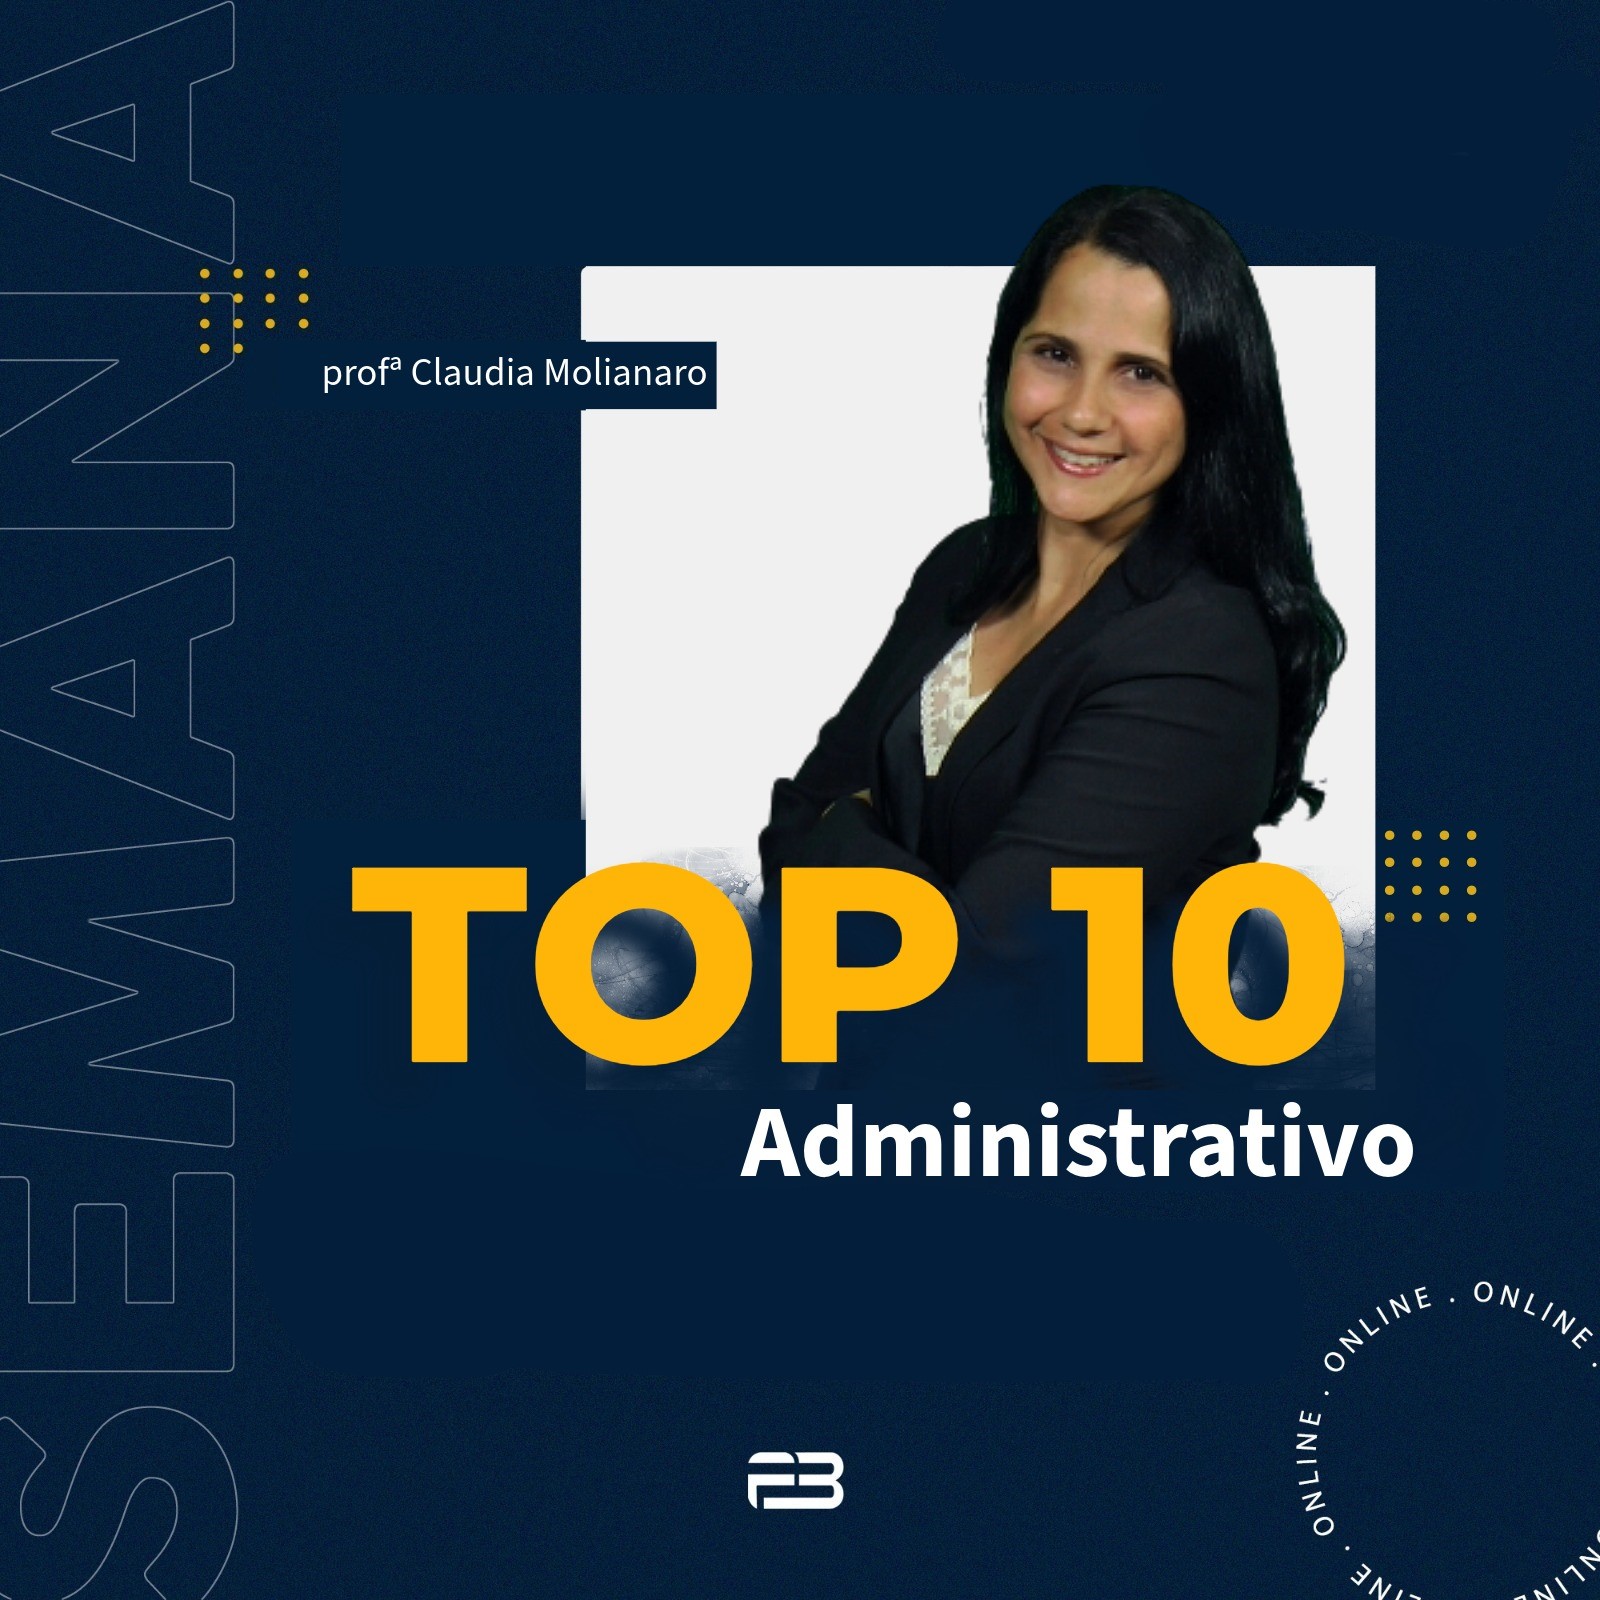 TOP 10 ADMINISTRATIVO - OAB 1 FASE 40 EXAME